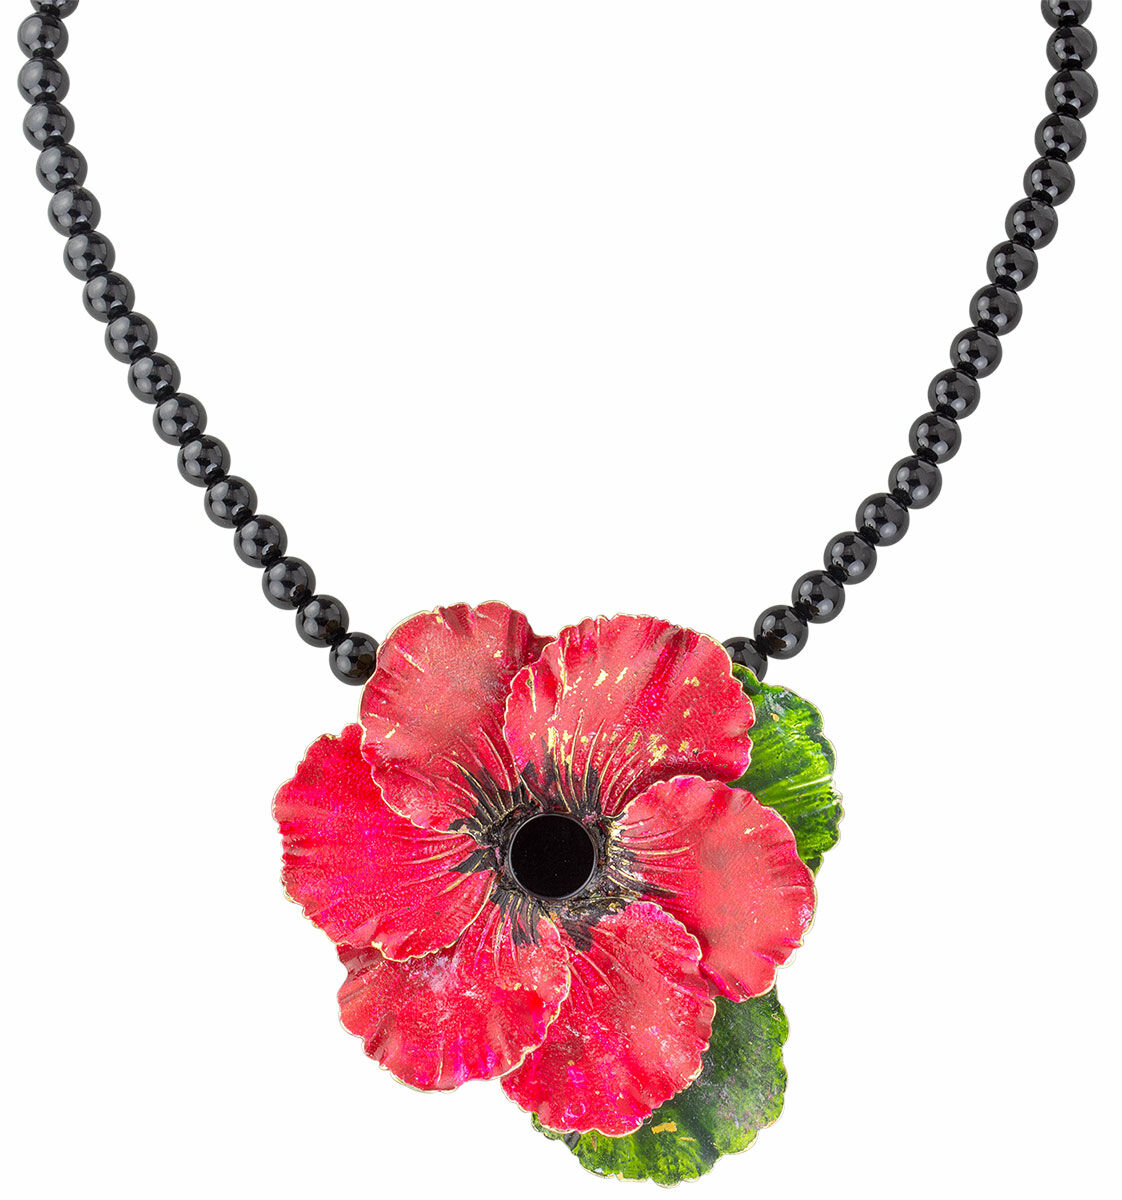 Pearl necklace "Poppy Flower" by Petra Waszak